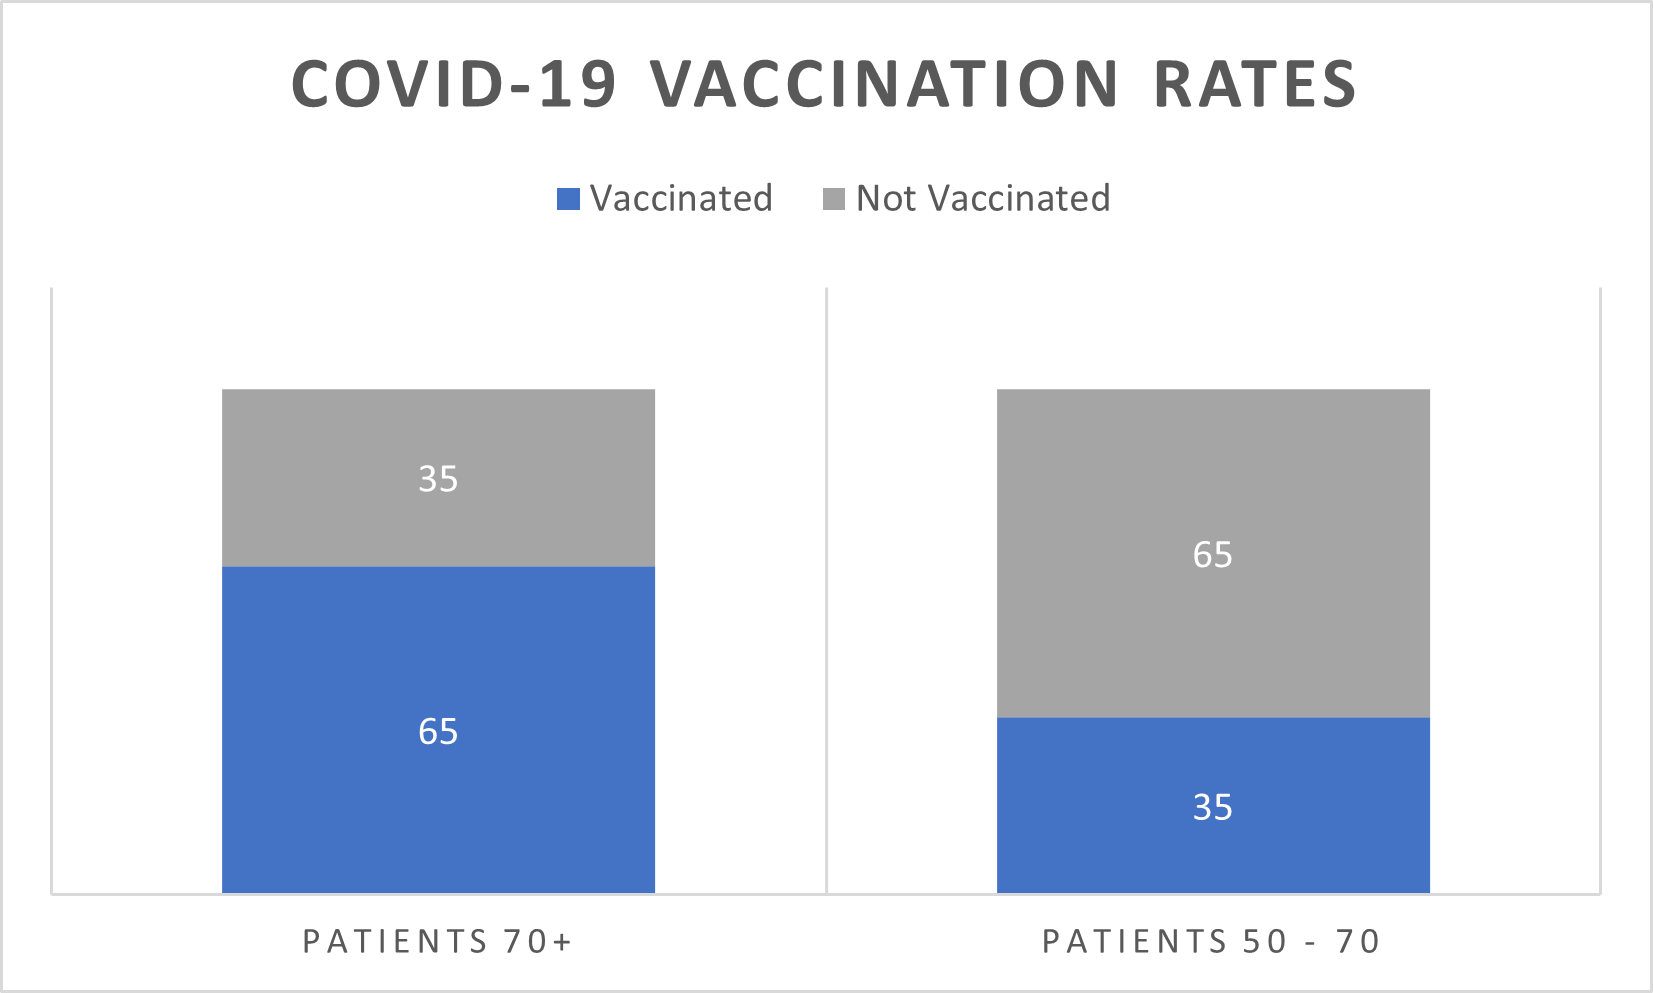 COVID-19 Vaccination Rates